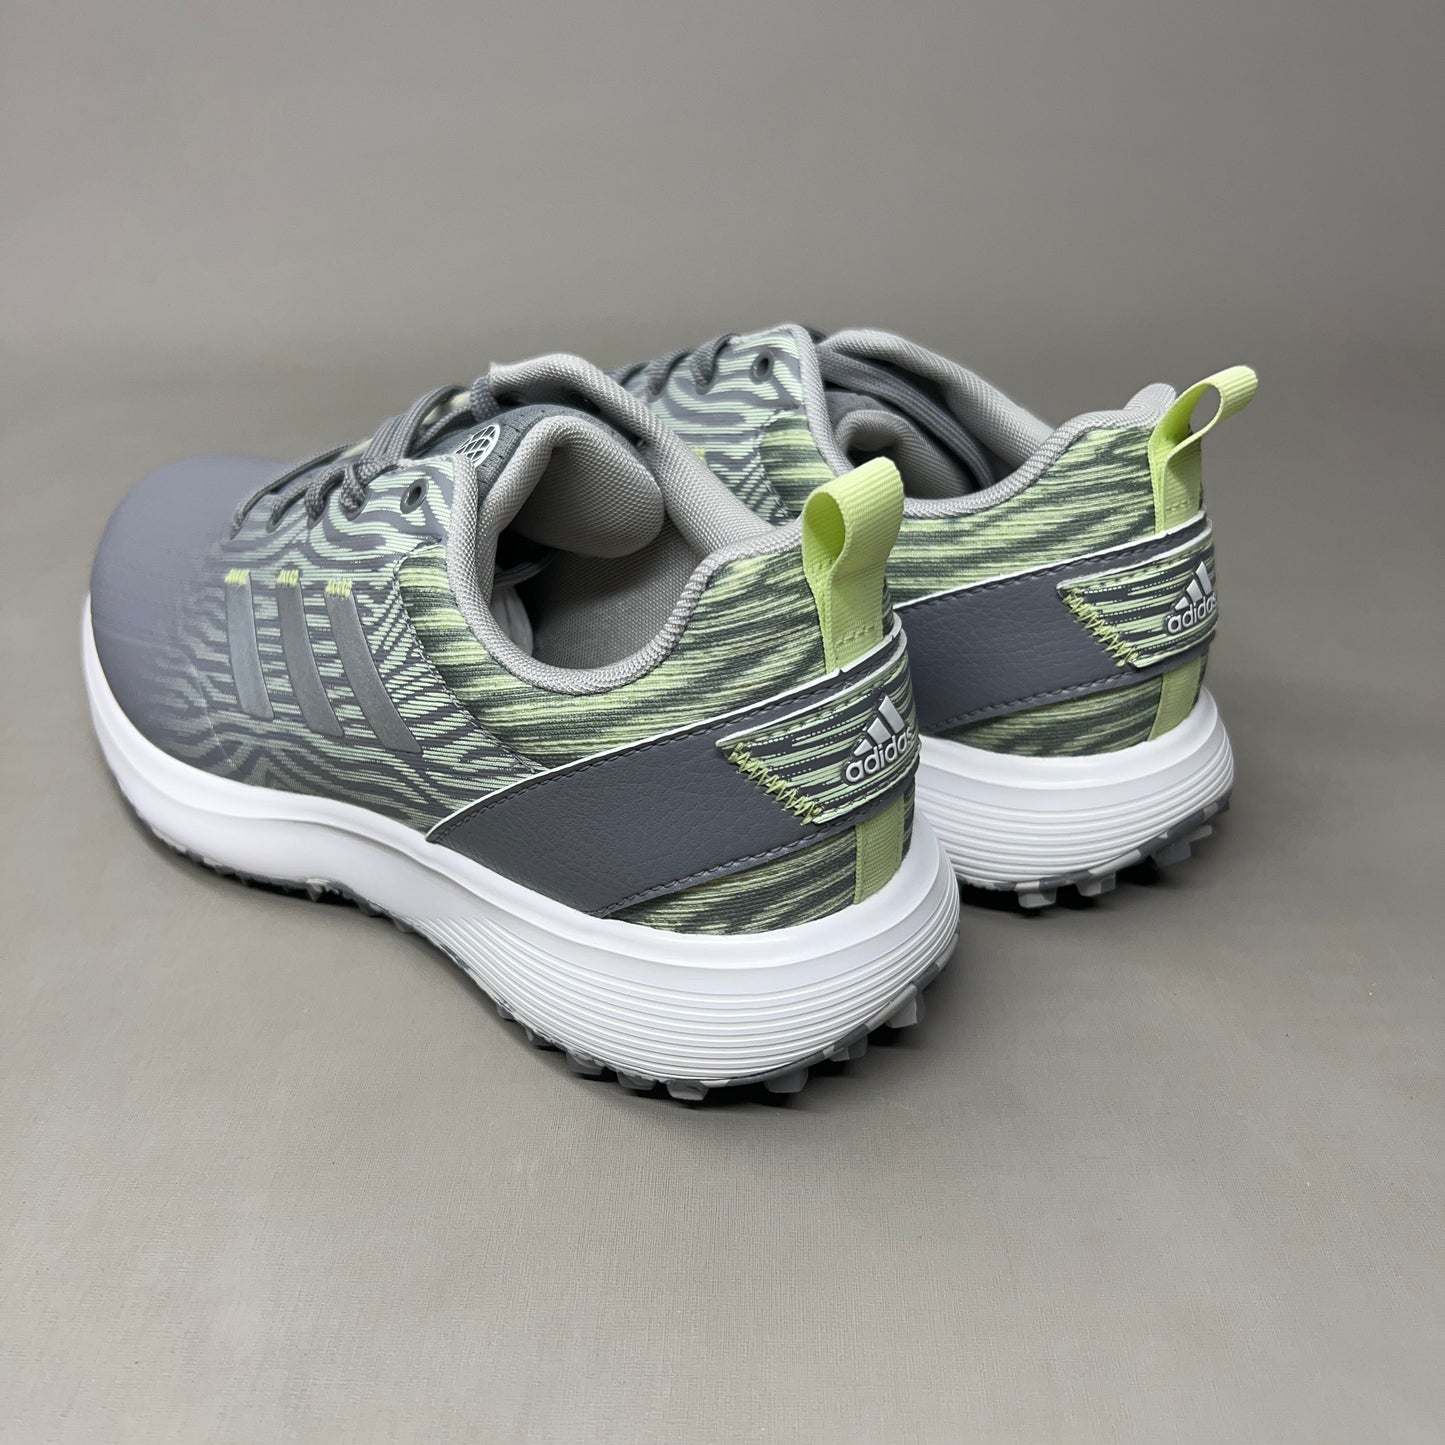 ADIDAS Golf Shoes W S2G SL Waterproof Women's Sz 5.5 Grey / Lime GZ3911 (New)